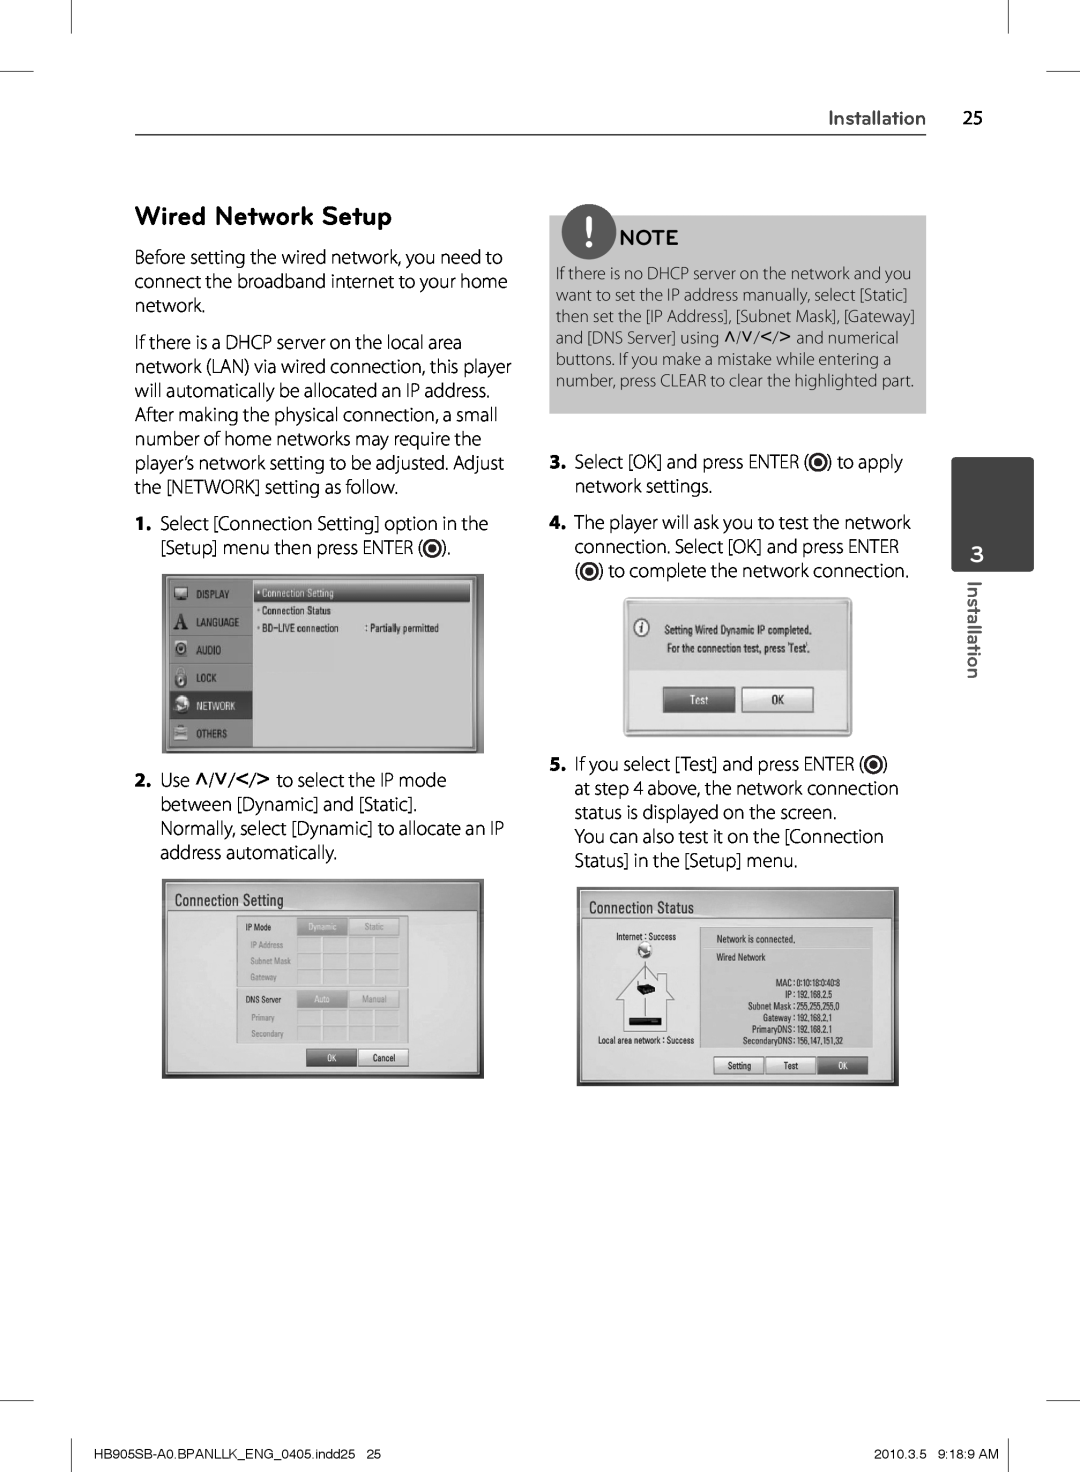 LG Electronics owner manual Wired Network Setup, Installation, HB905SB-A0.BPANLLK ENG 0405.indd2525, 2010.3.5 9 18 9 AM 